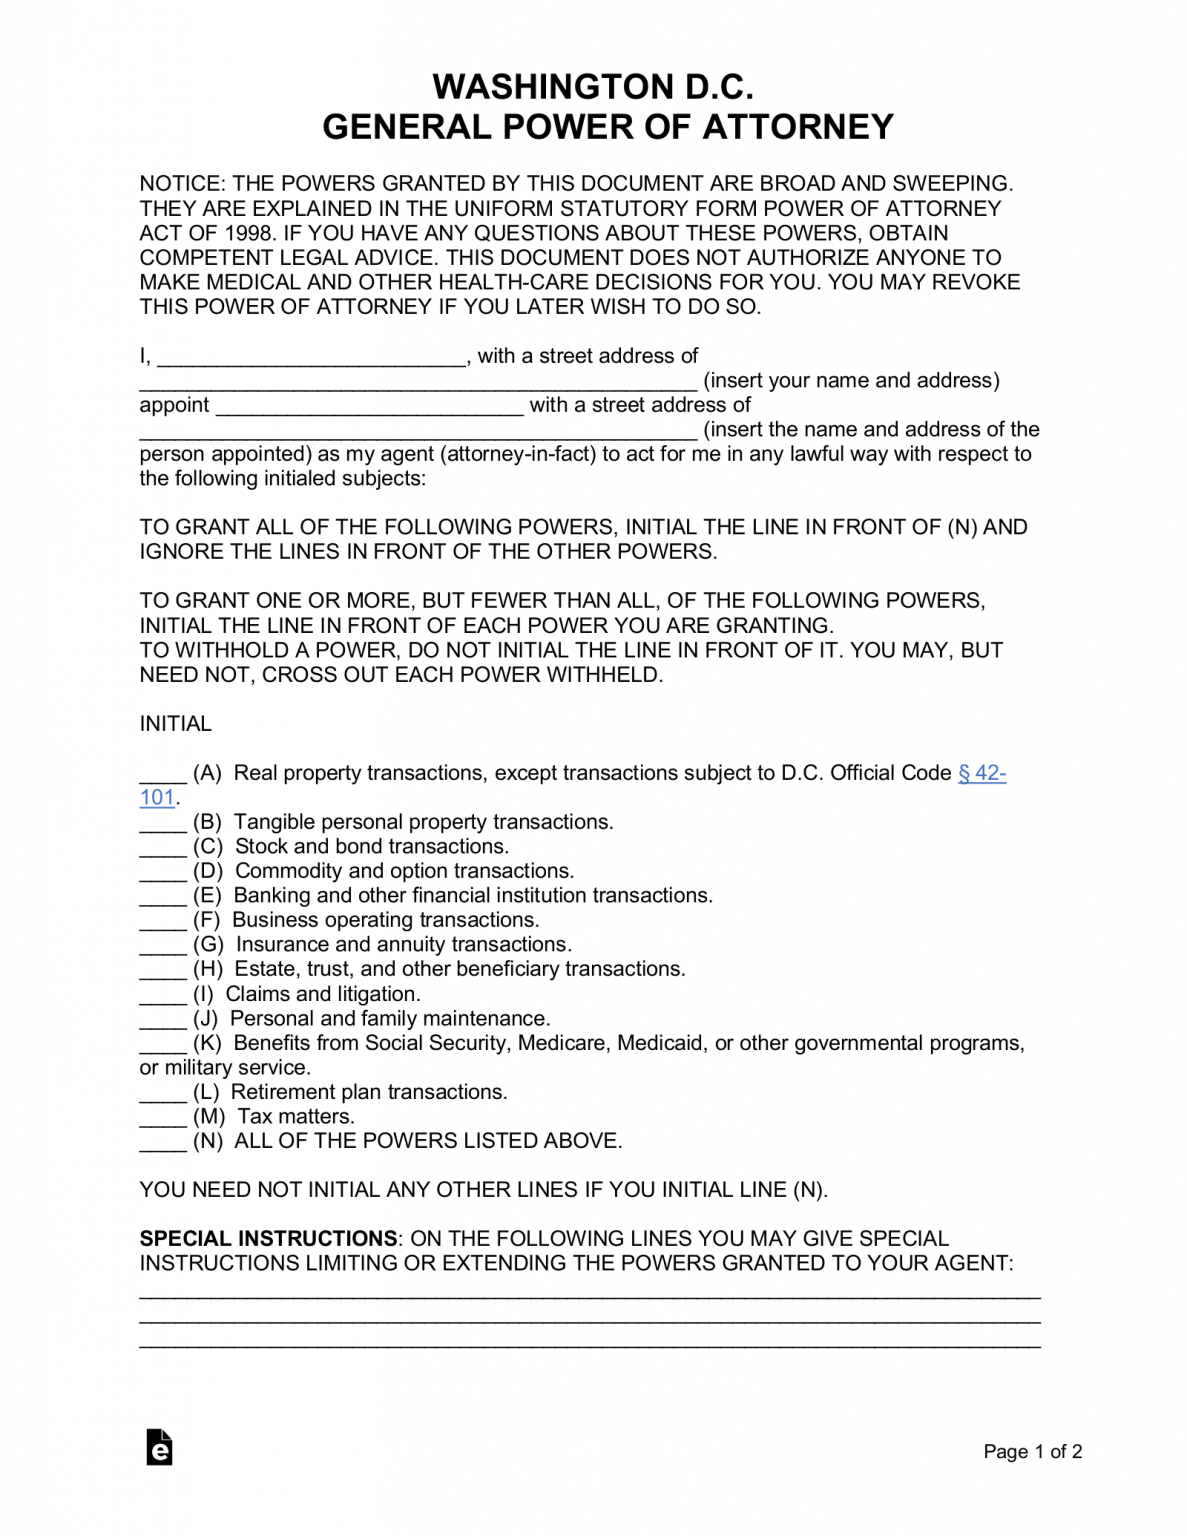 Attorney document review jobs washington dc